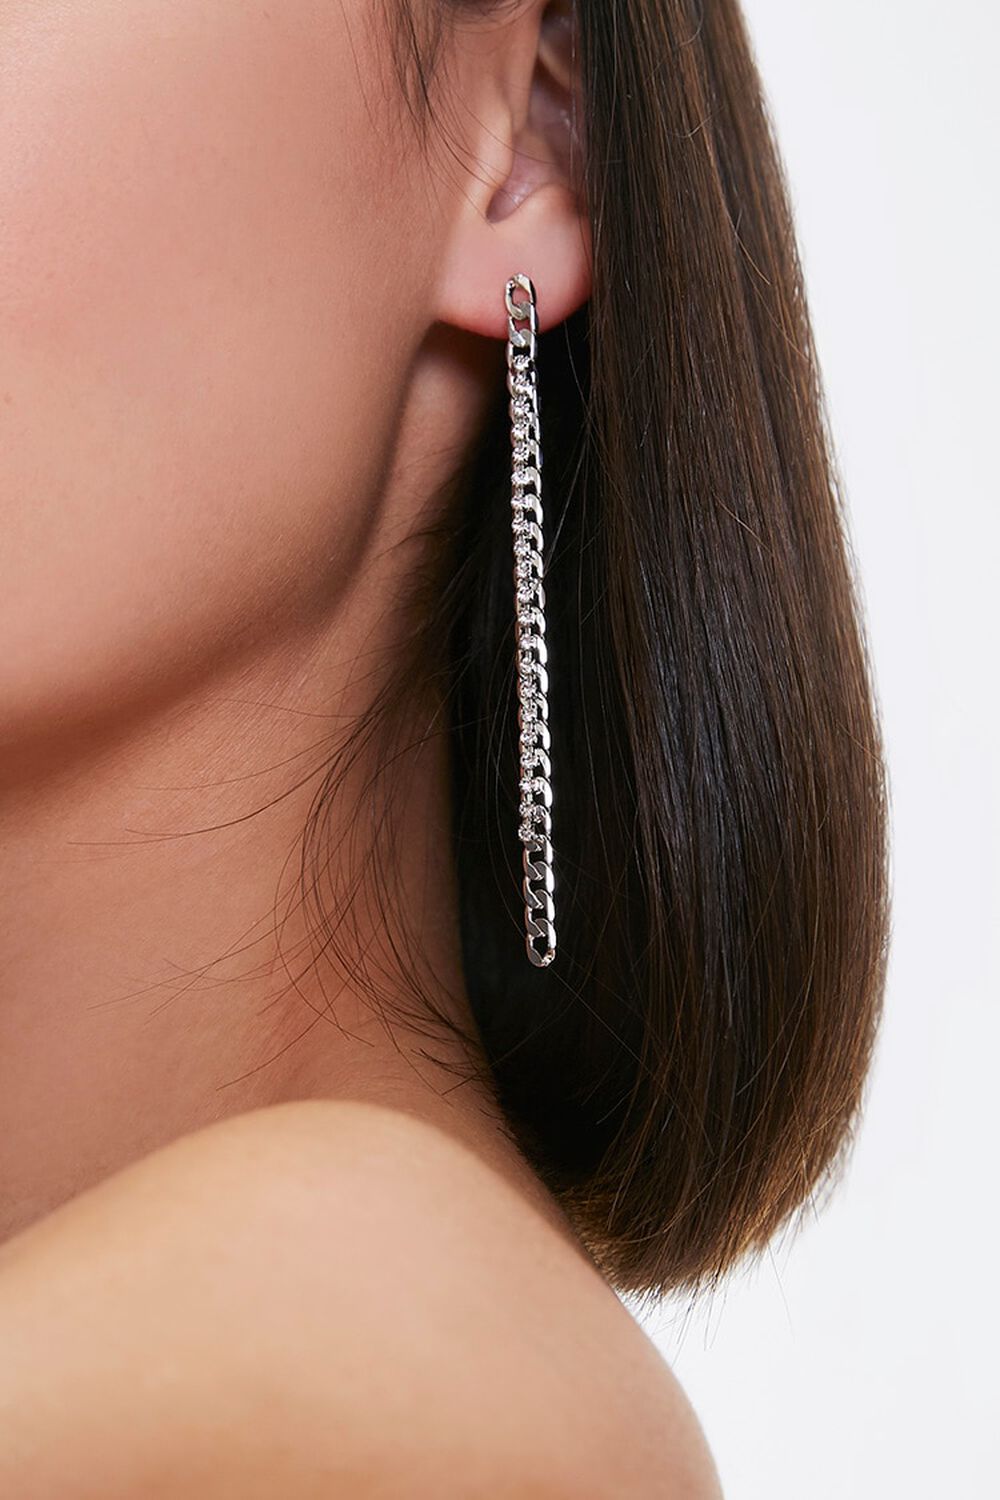 SILVER Rhinestone Chain Duster Earrings, image 1